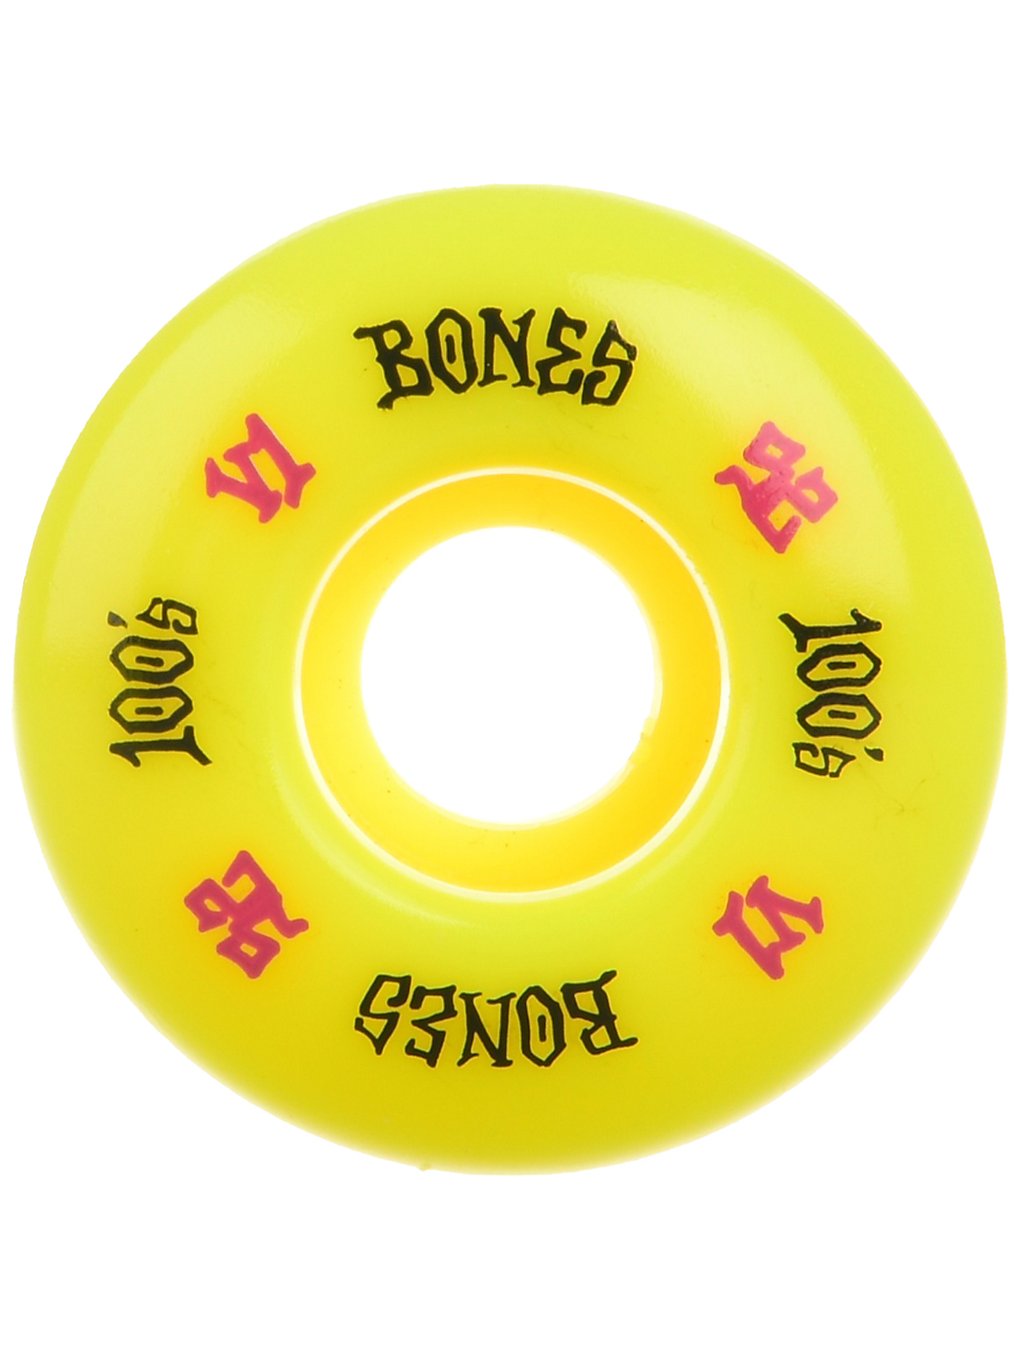 Bones Wheels 100's OG #17 V1 100A 52mm Wheels yellow